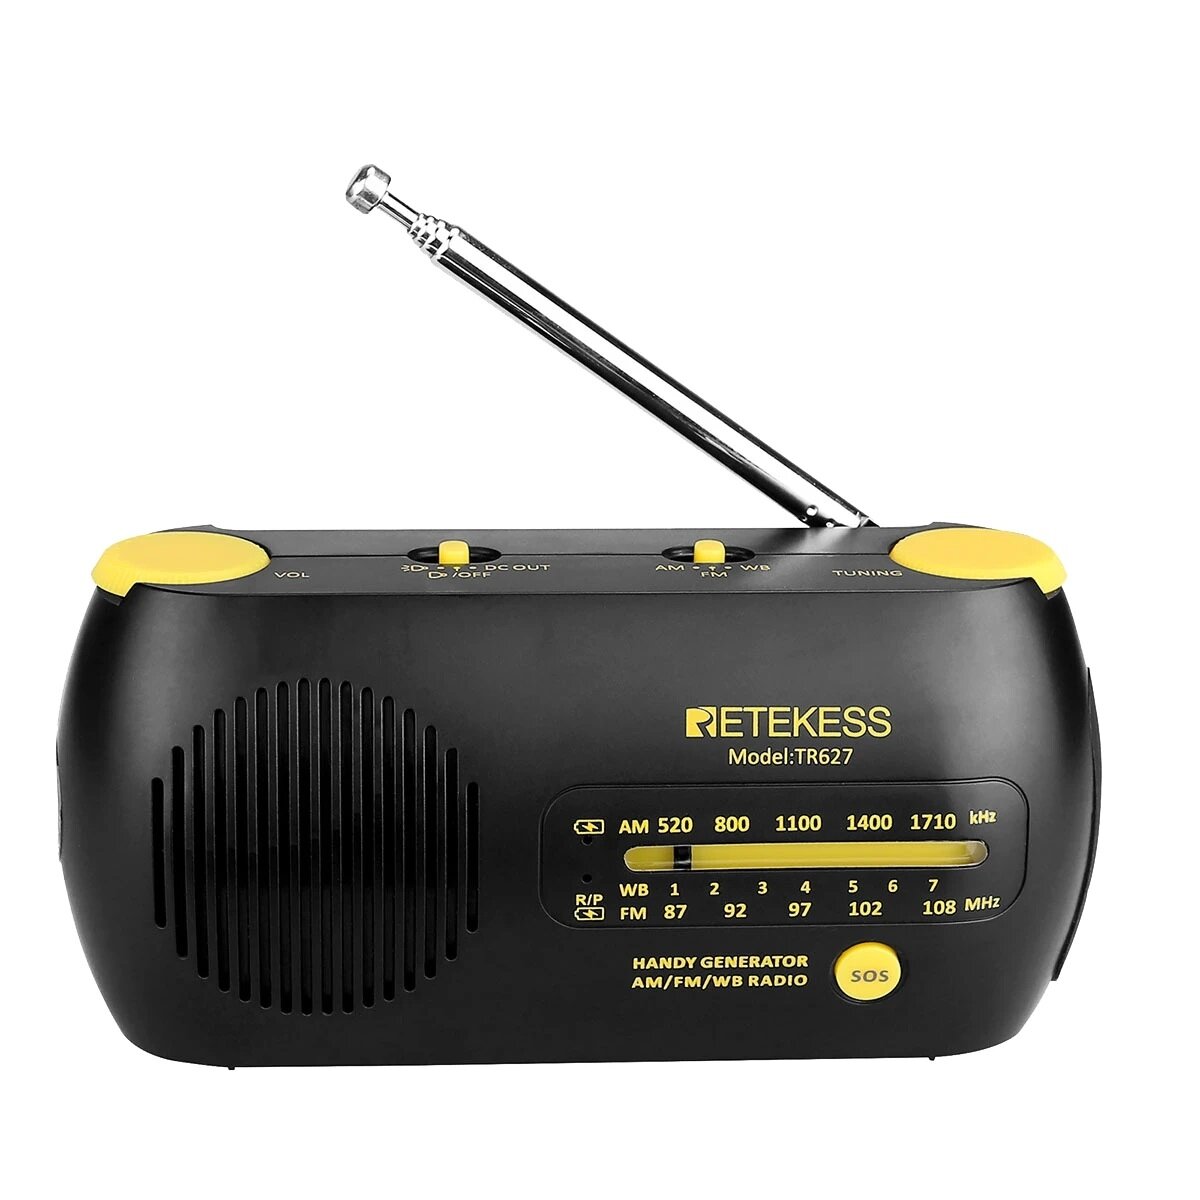 

Retekes TR627 Radio Portable Radio FM AM NOAA Weather Radio Emergency SOS Hand Crank Solar Receiver With Flashlight MP3